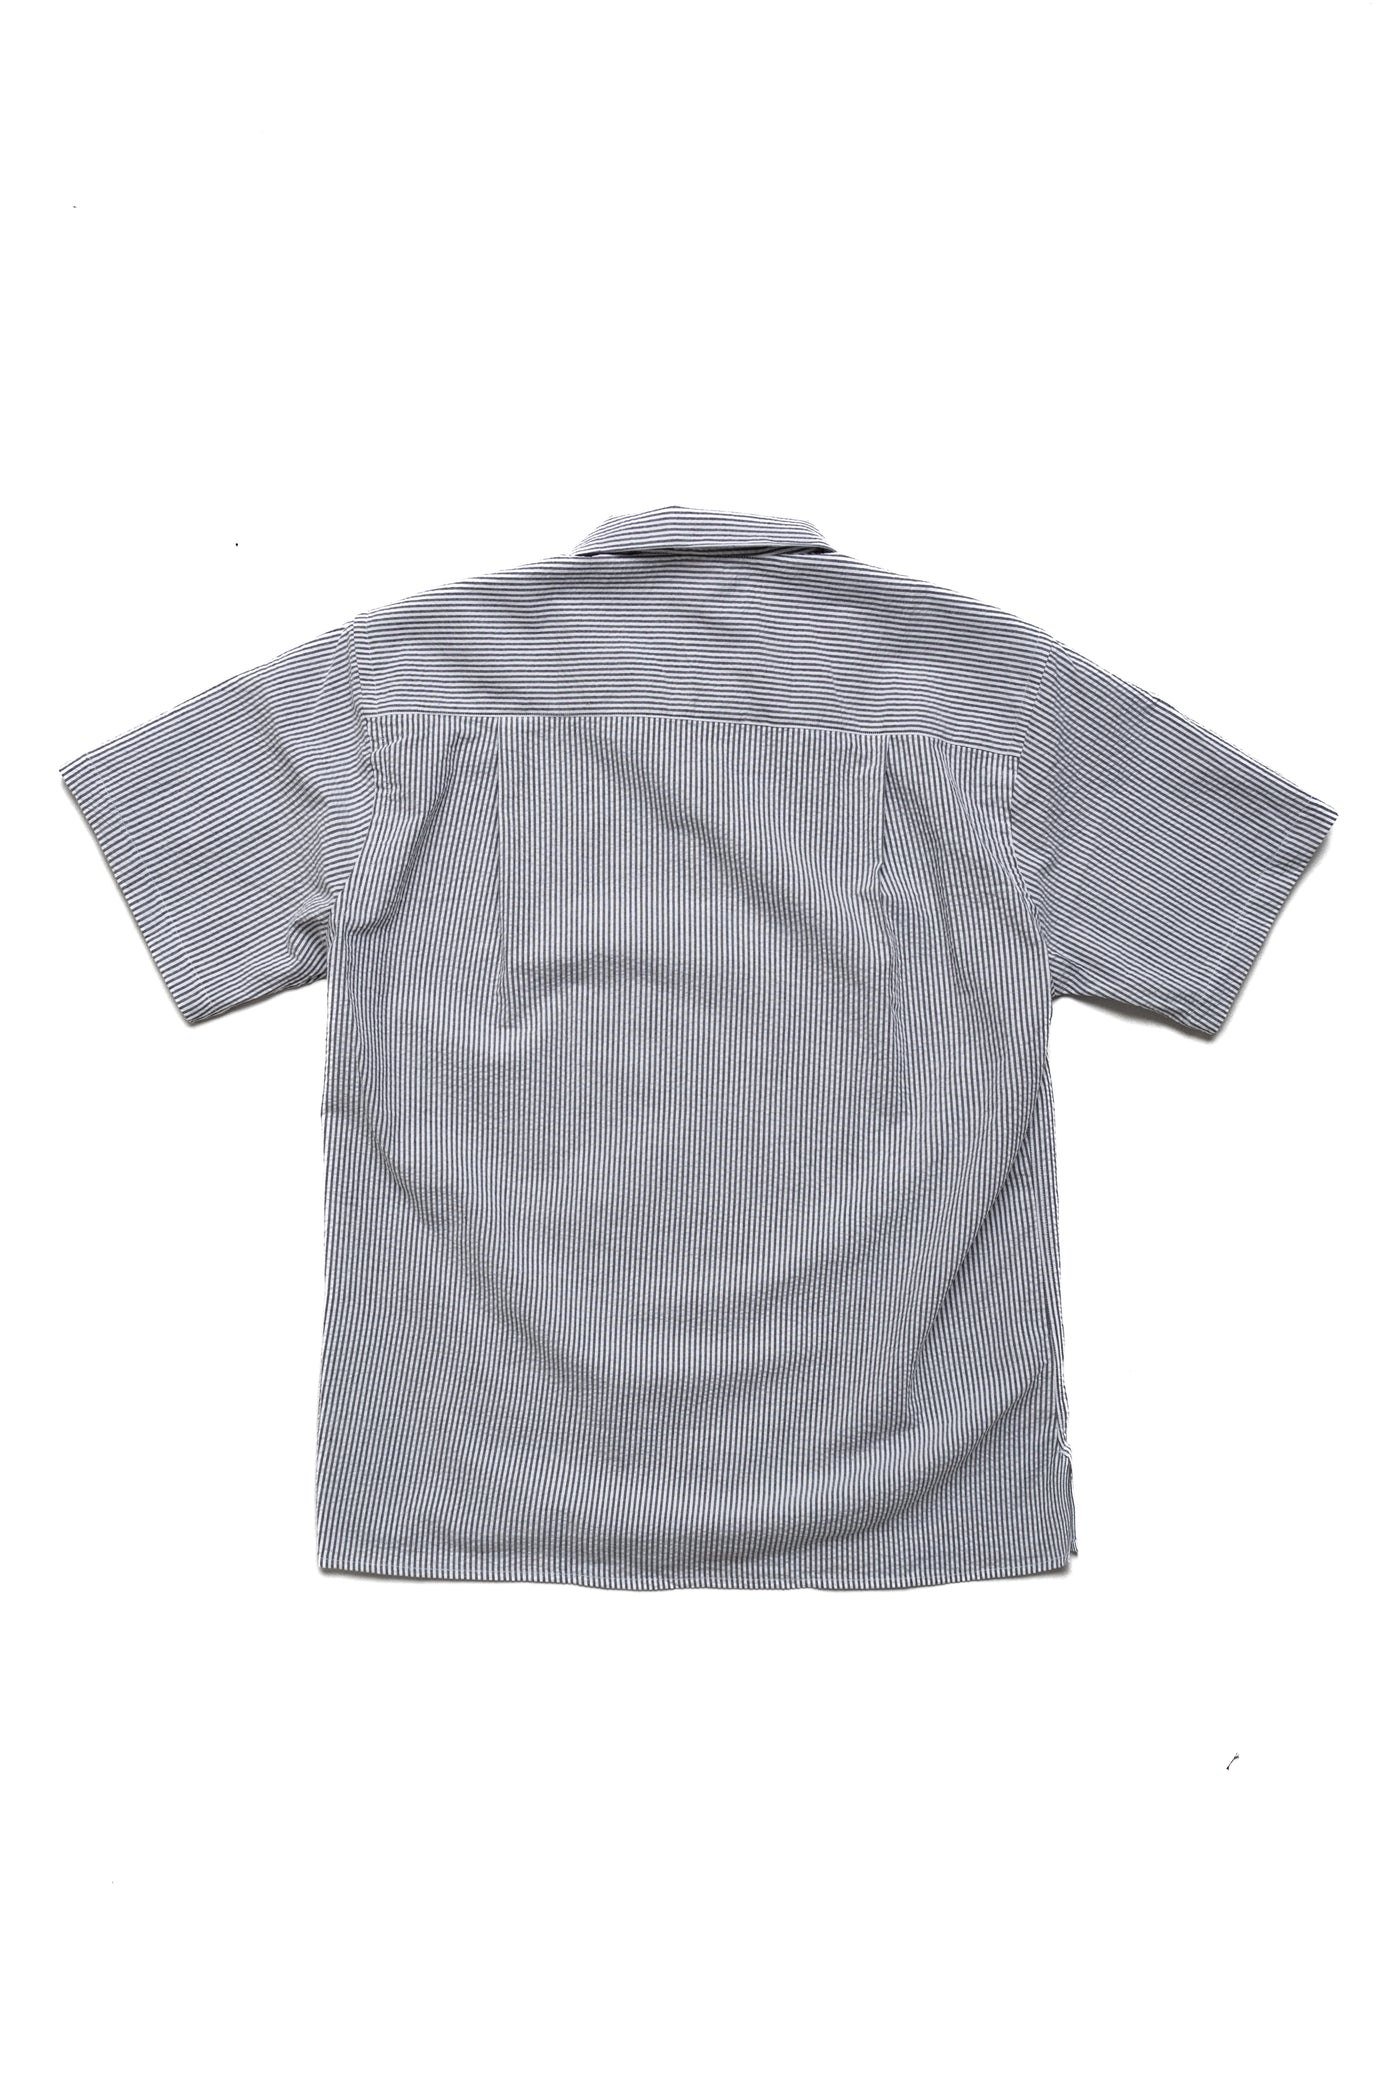 S/S Beach Shirt - Charcoal